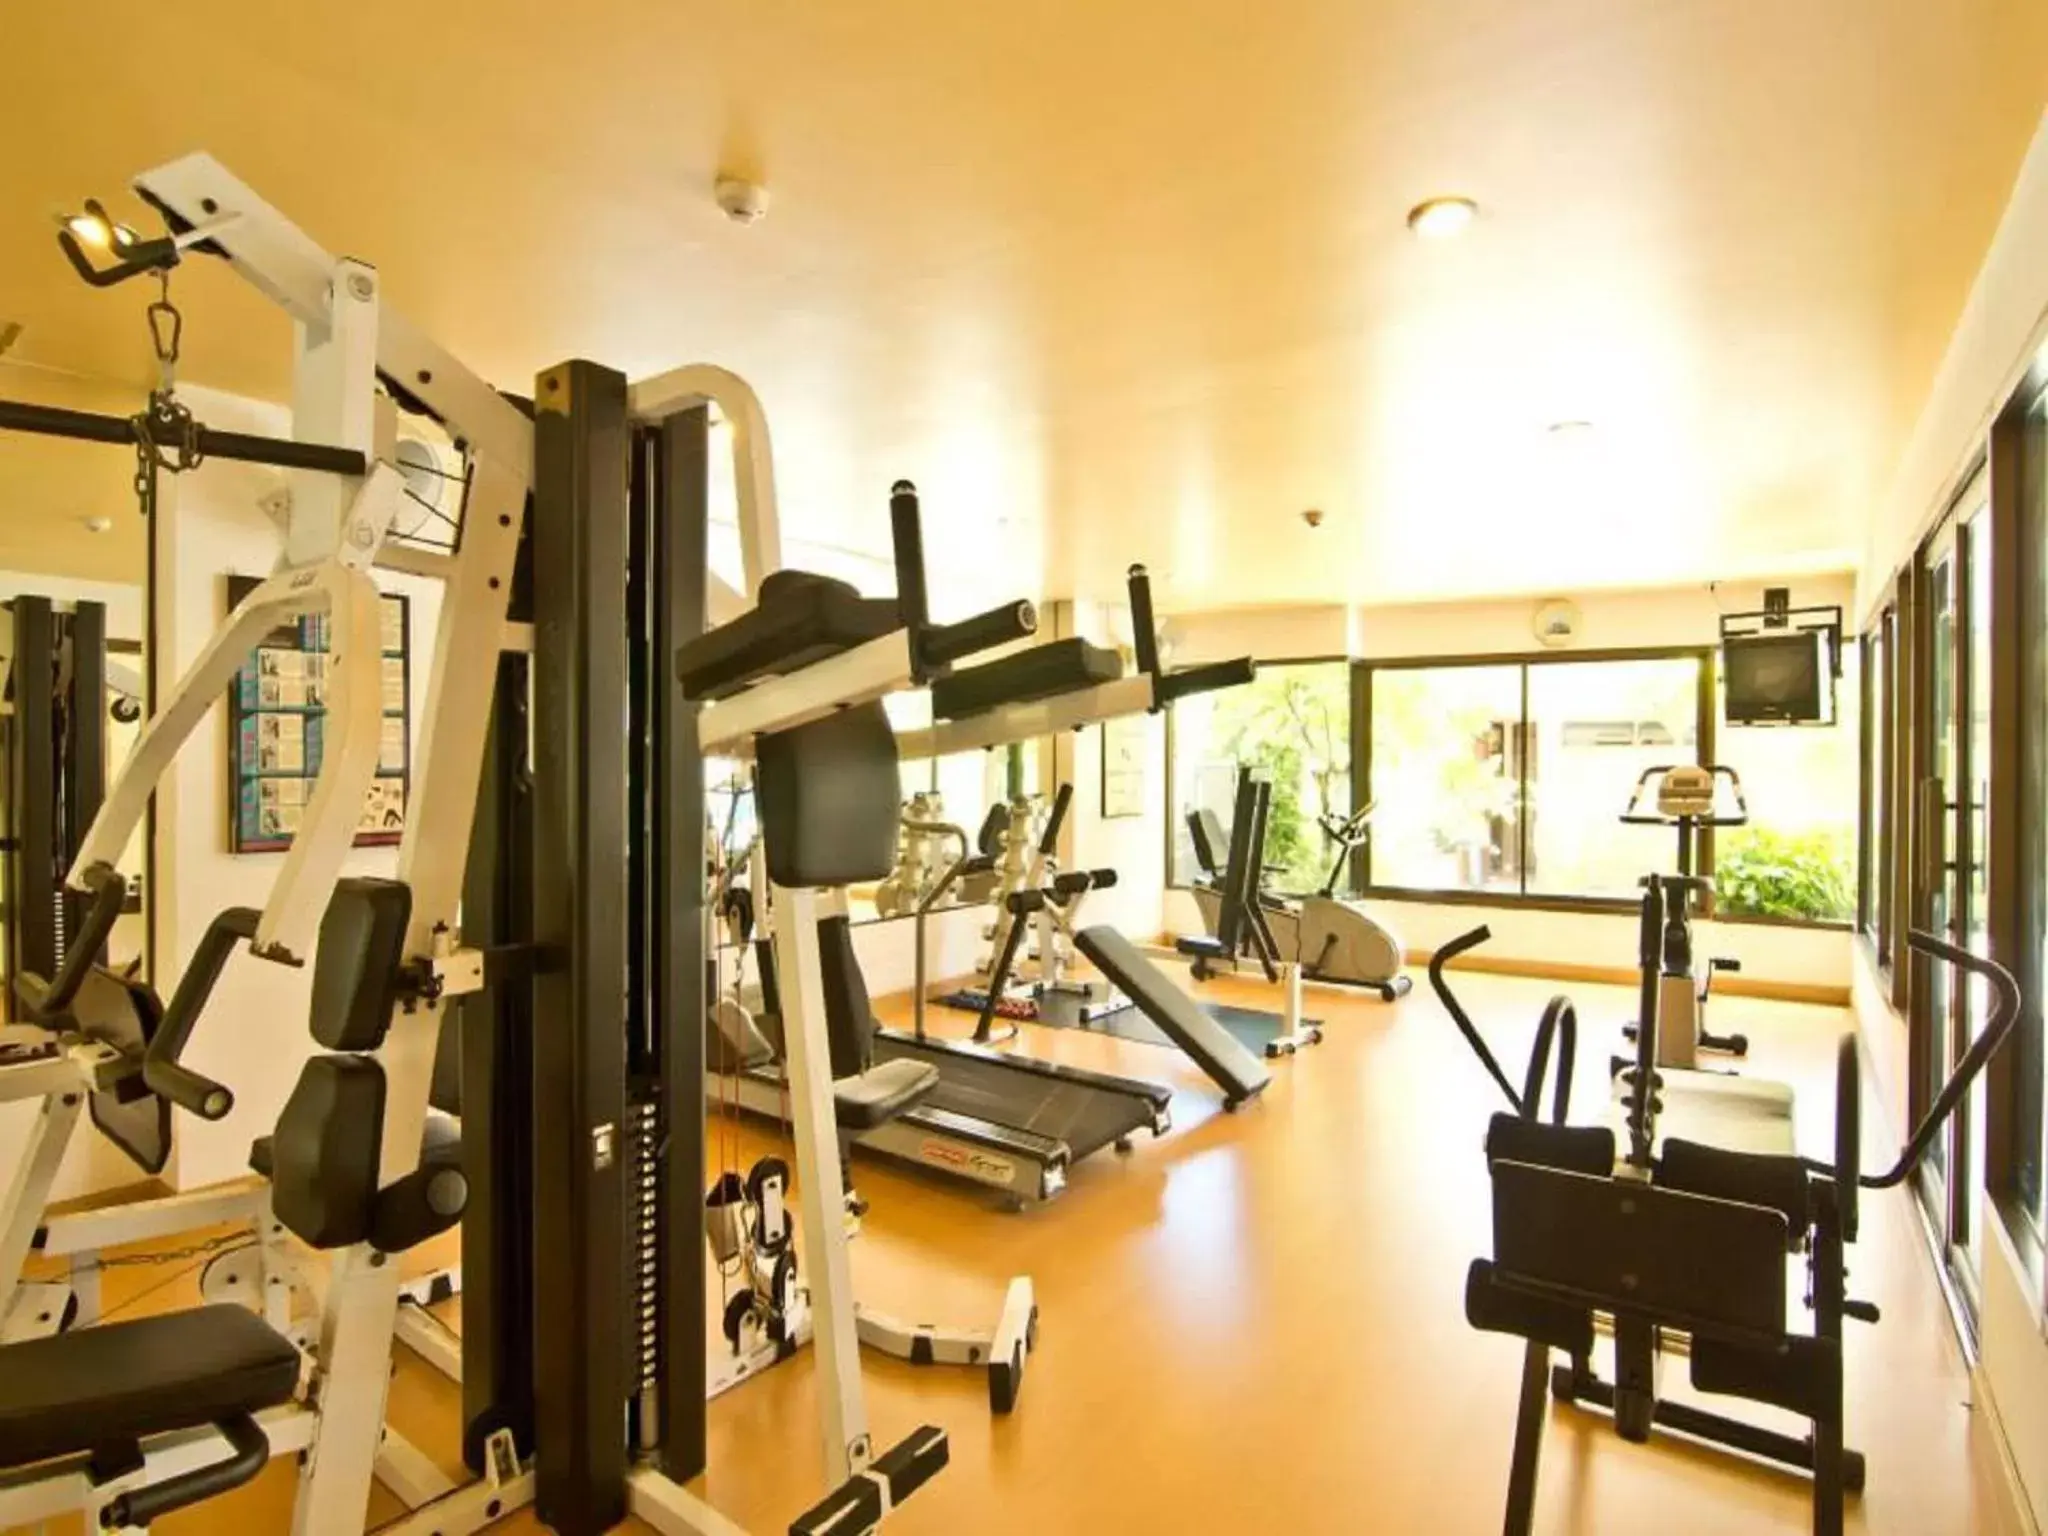 Fitness centre/facilities, Fitness Center/Facilities in Best Beach Villa